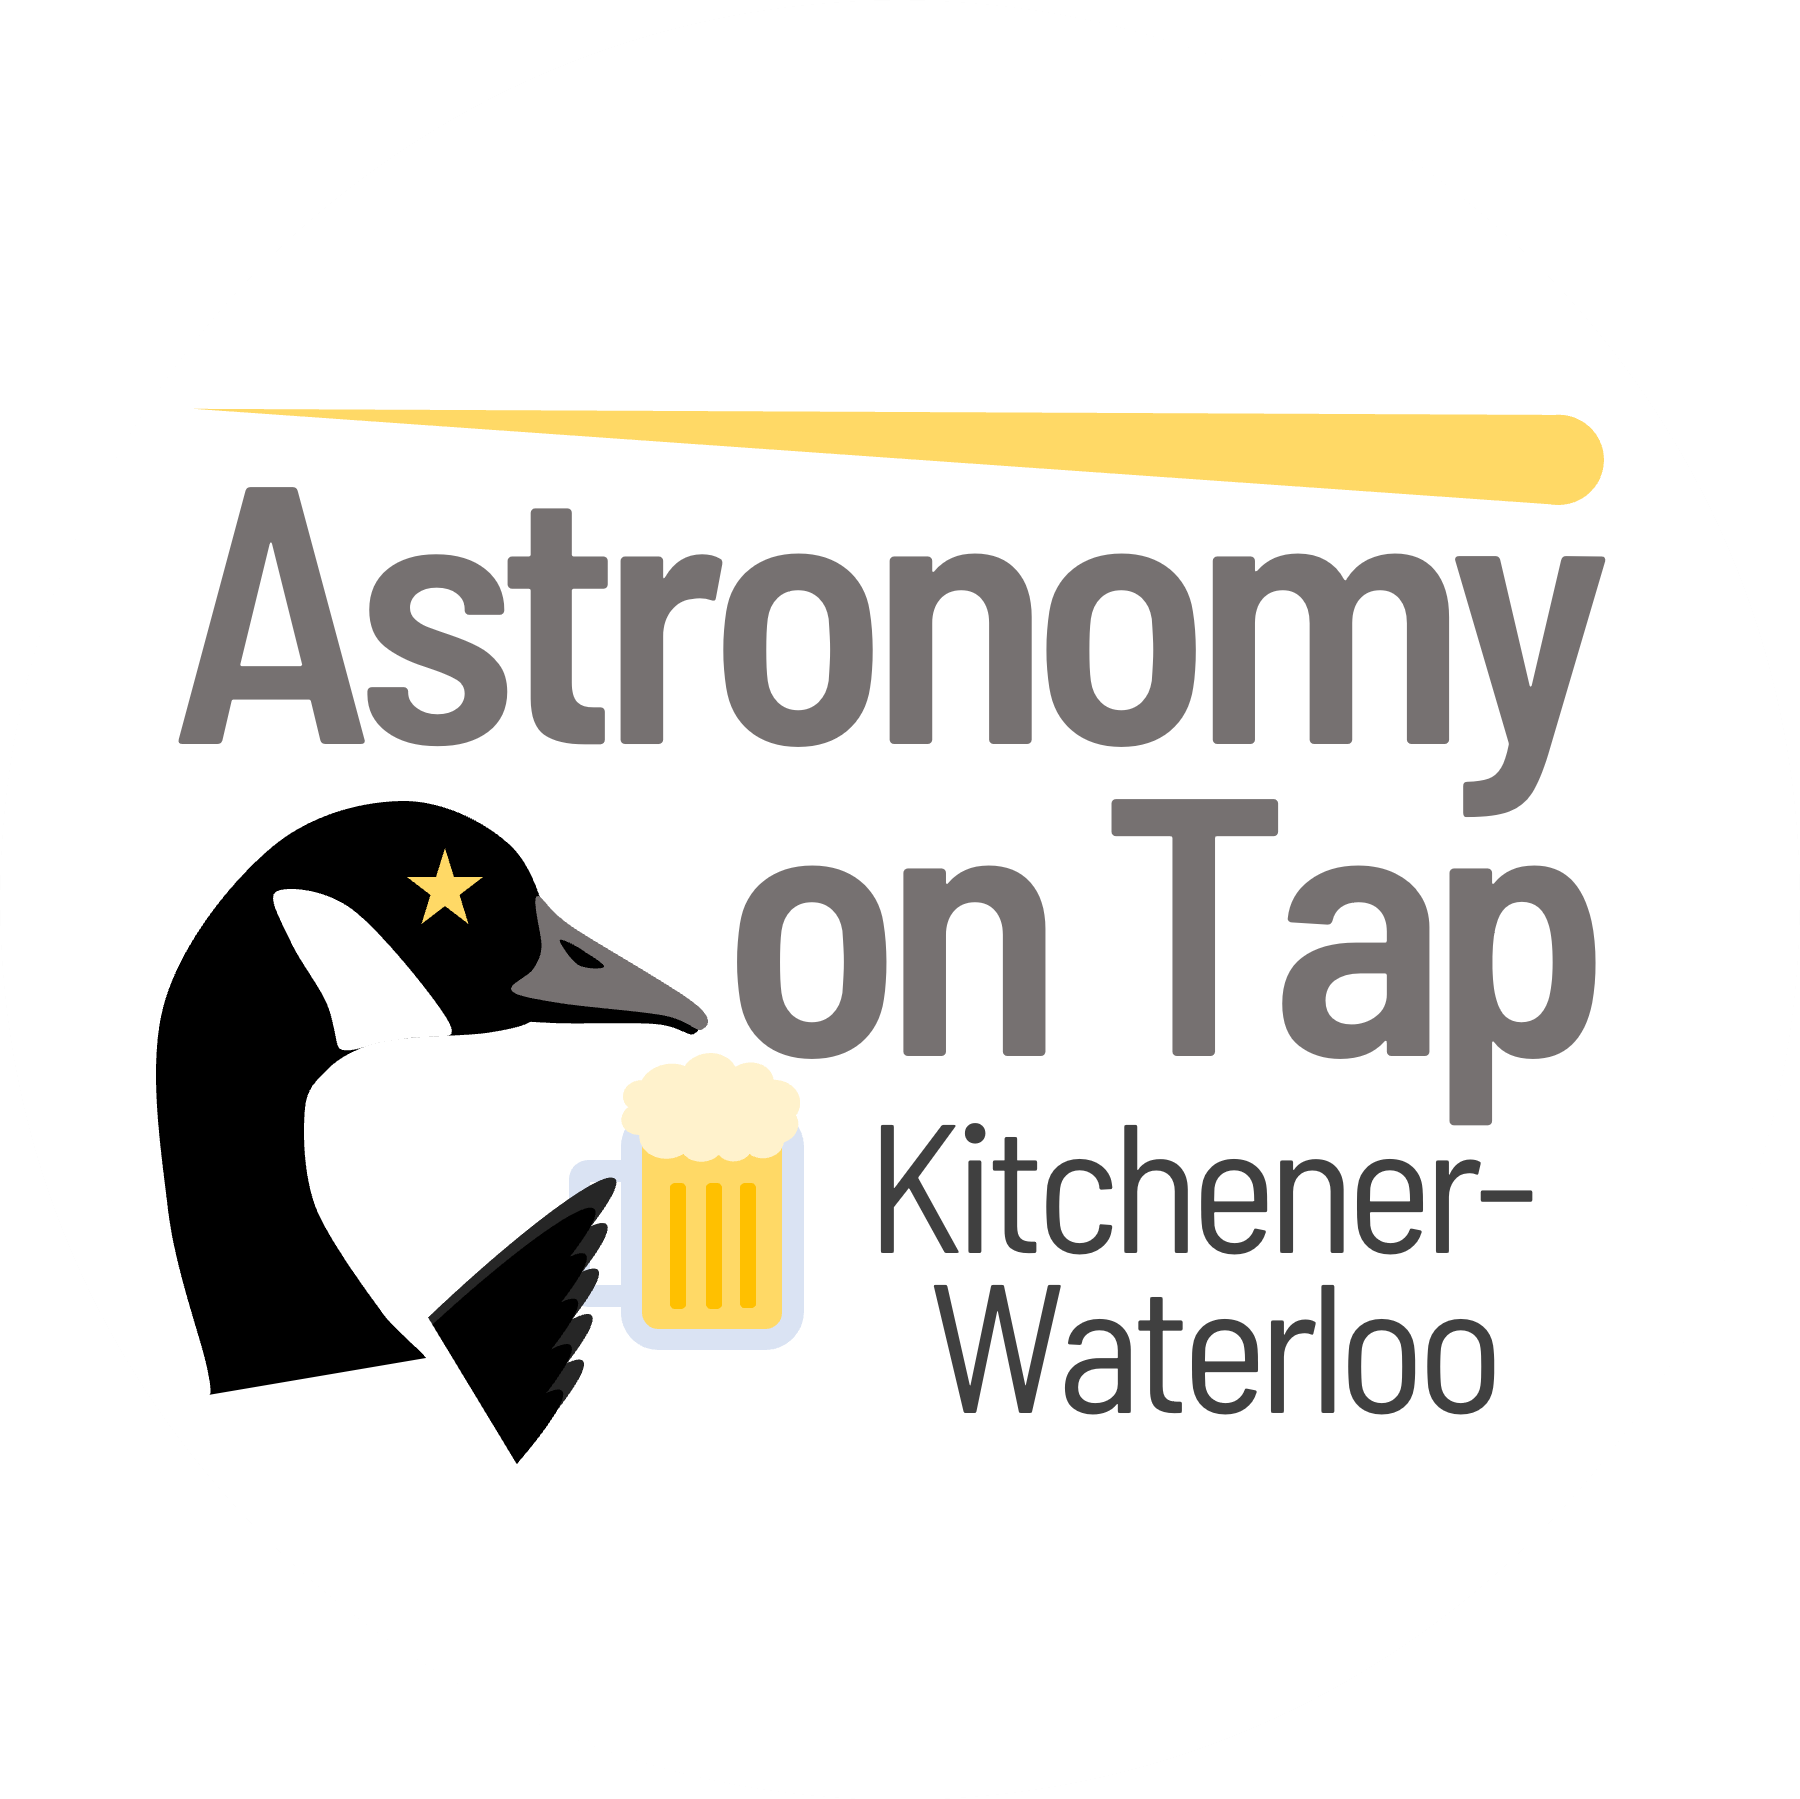 Astronomy on Tap Kitchener-Waterloo logo